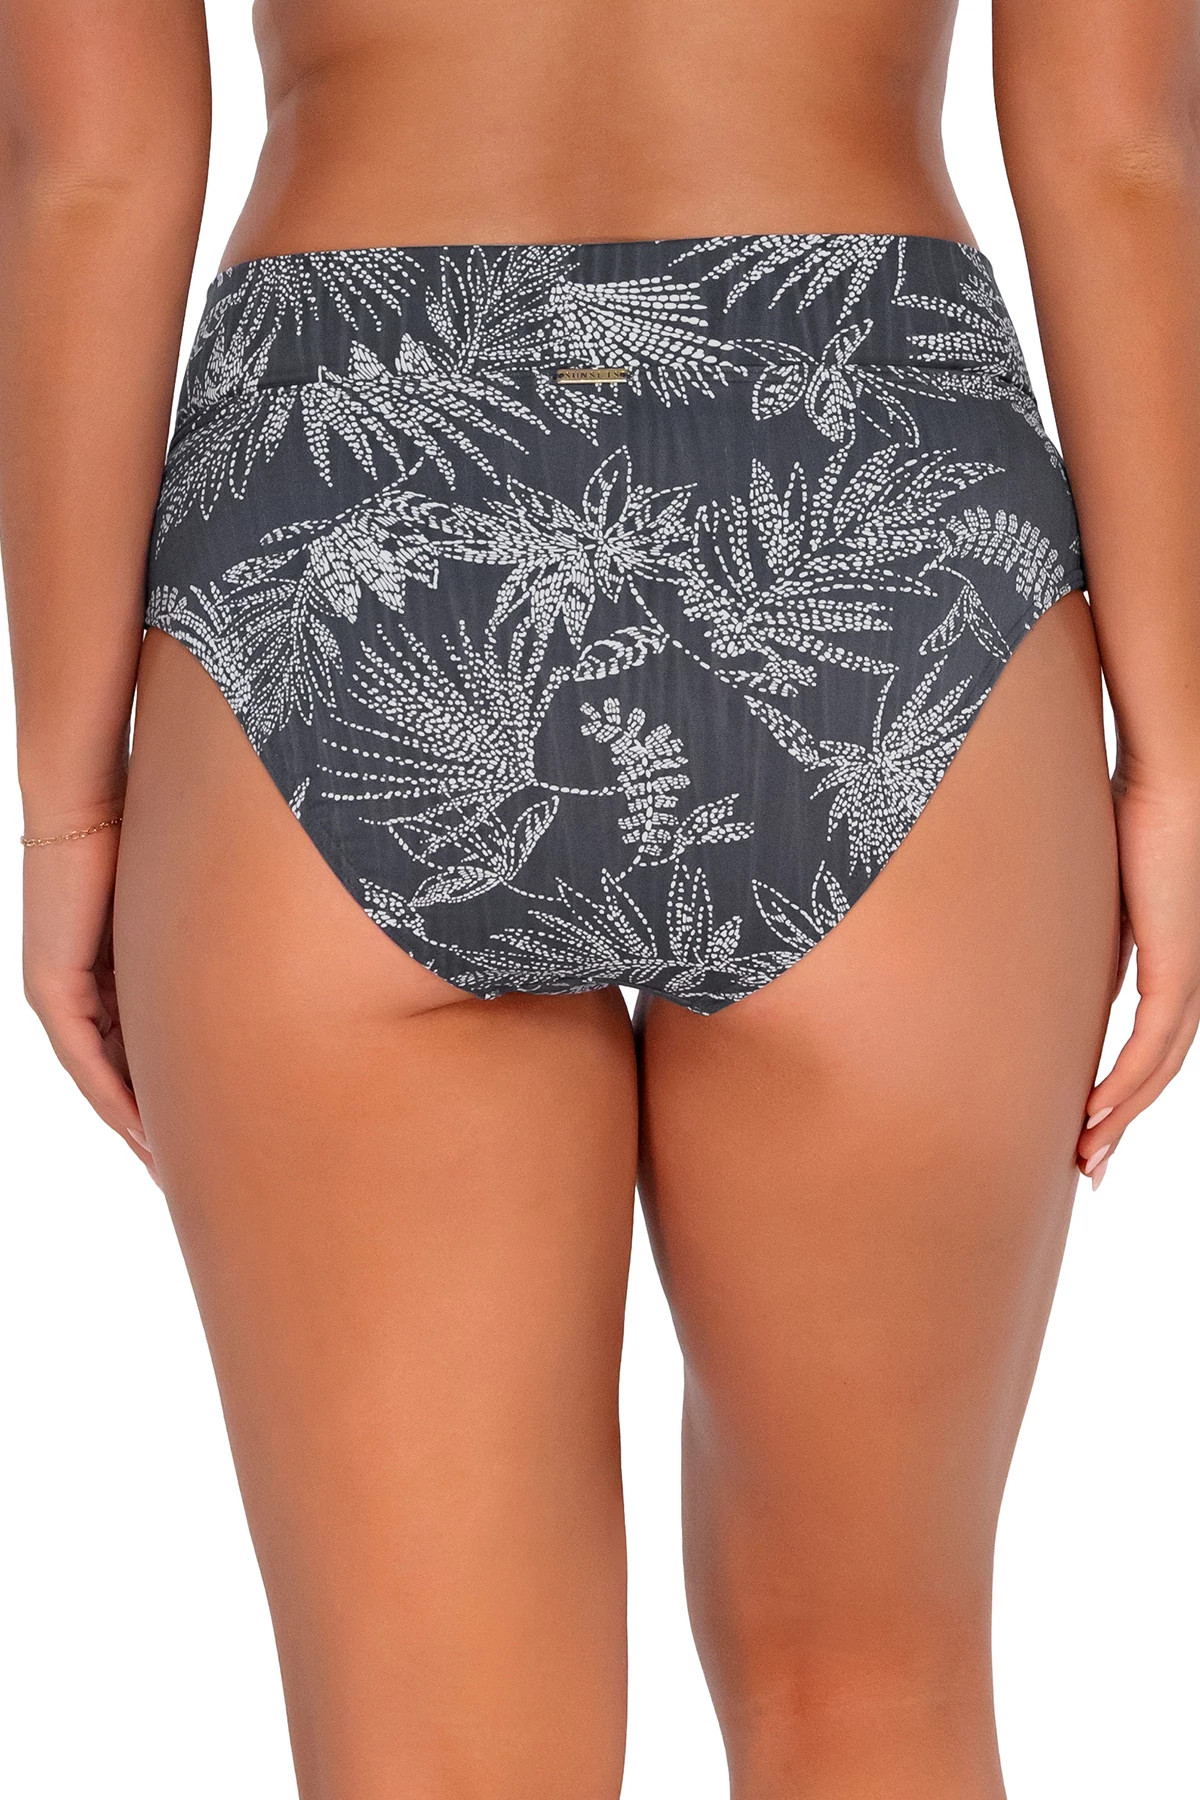 FANFARE SEAGRASS TEXTURE Summer Lovin' V-Front High Waist Bikini Bottom image number 2